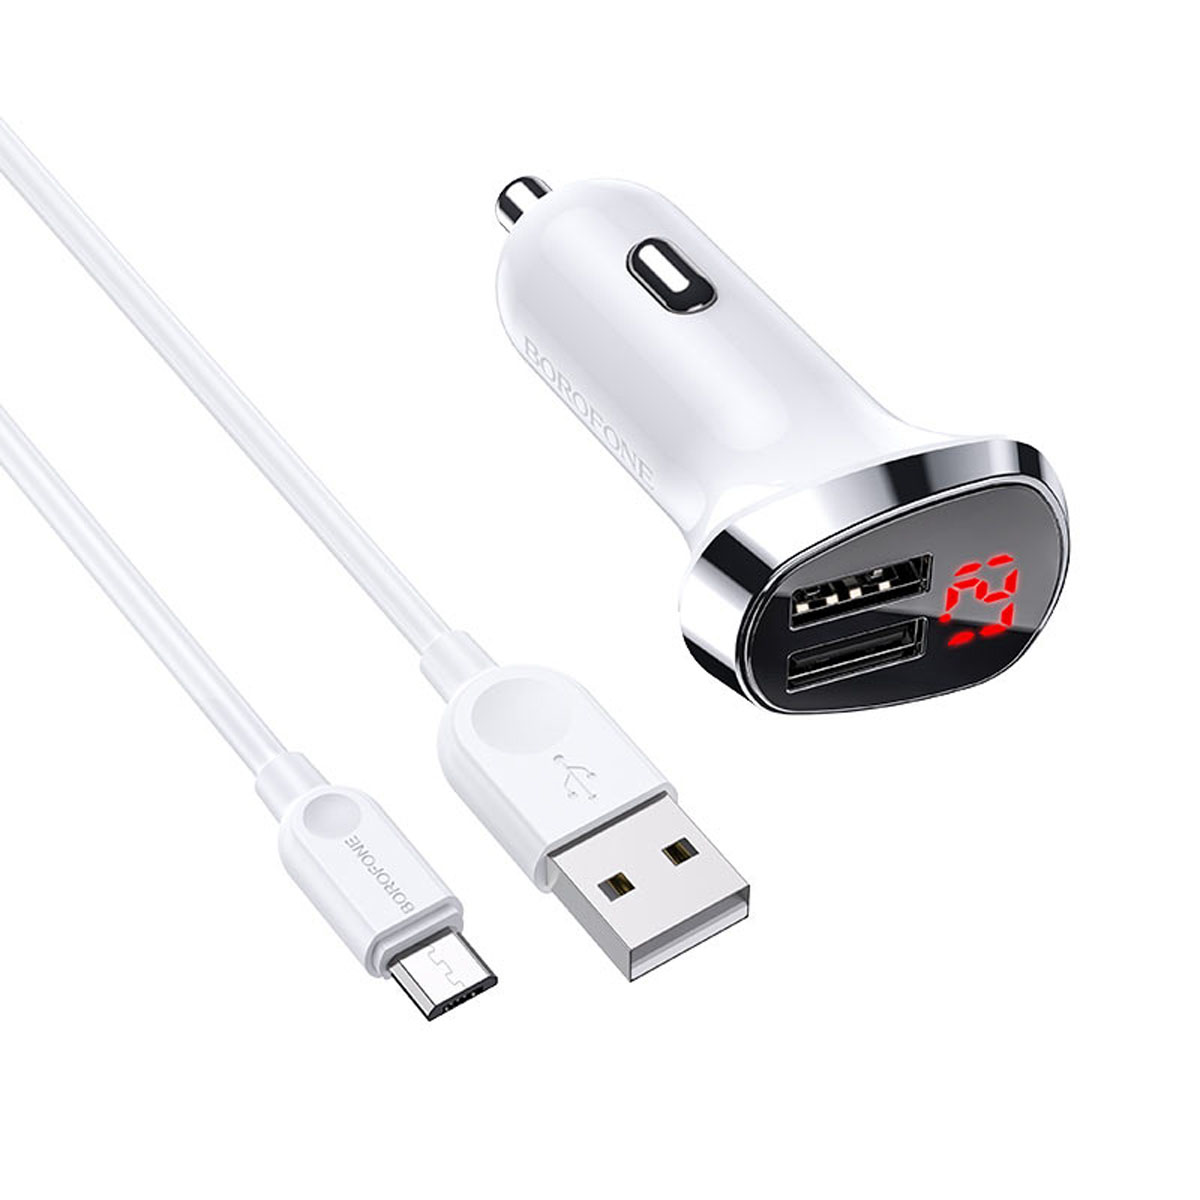 АЗУ (Автомобильное зарядное устройство) BOROFONE BZ15 Auspicious с кабелем Micro USB, 2.4А, 12W, 2 USB, длина 1 метр, цвет белый